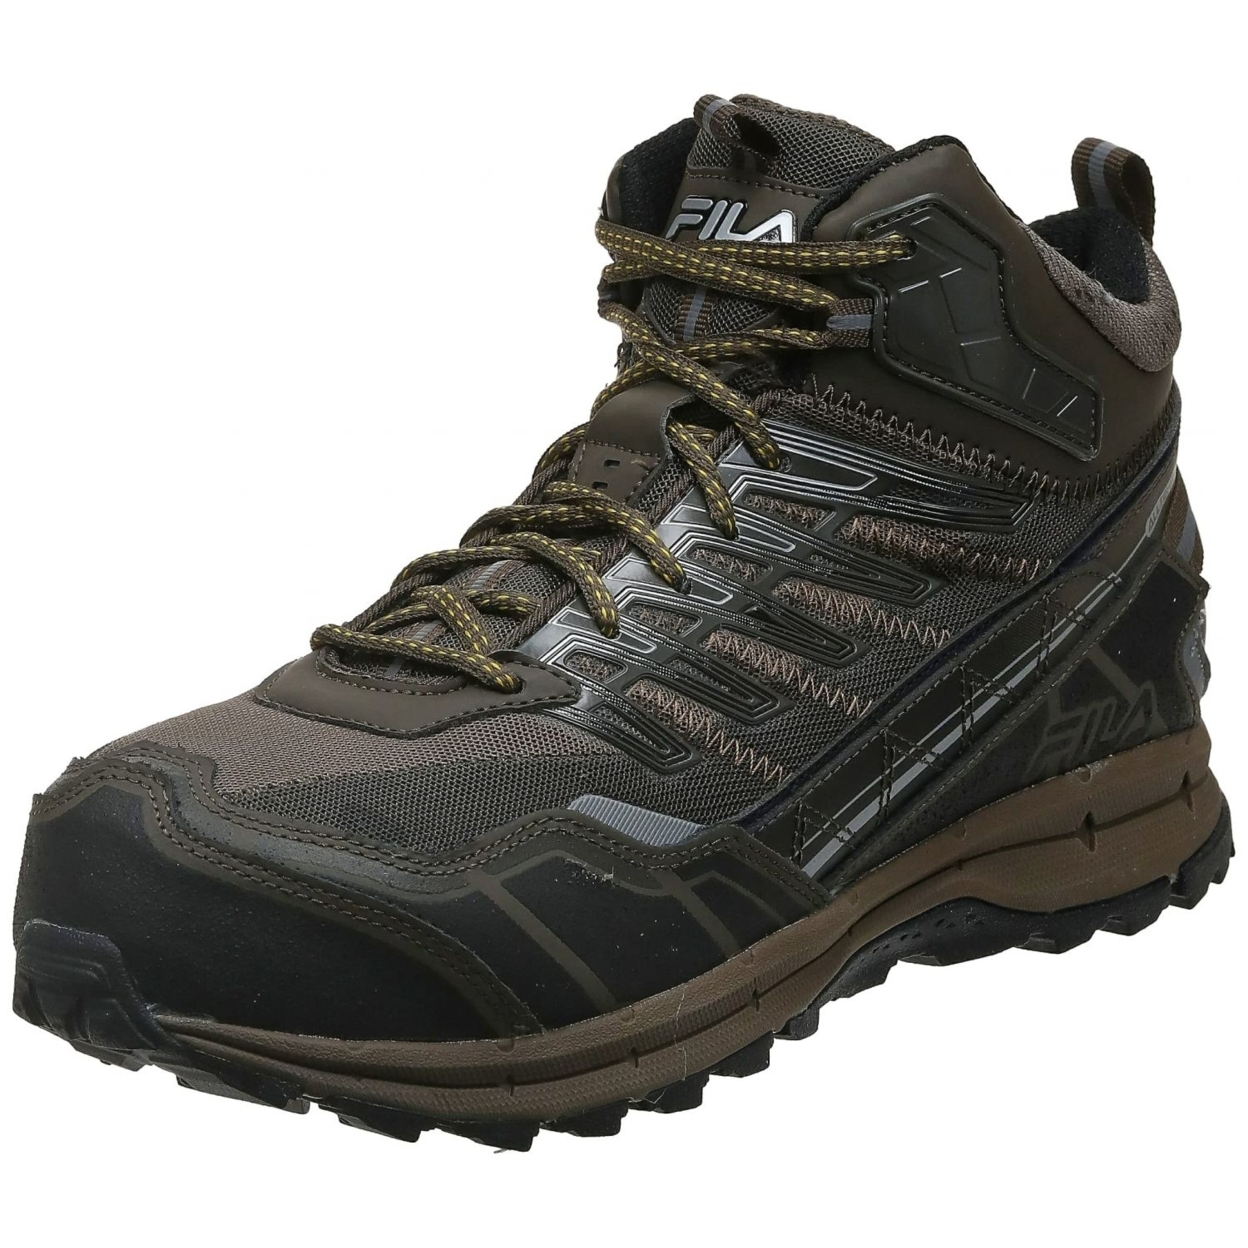 Fila Men's Hail Storm 3 Mid Composite Toe Trail Work Shoes Hiking WNUT/MBRN/GFUS - WNUT/MBRN/GFUS, 10.5